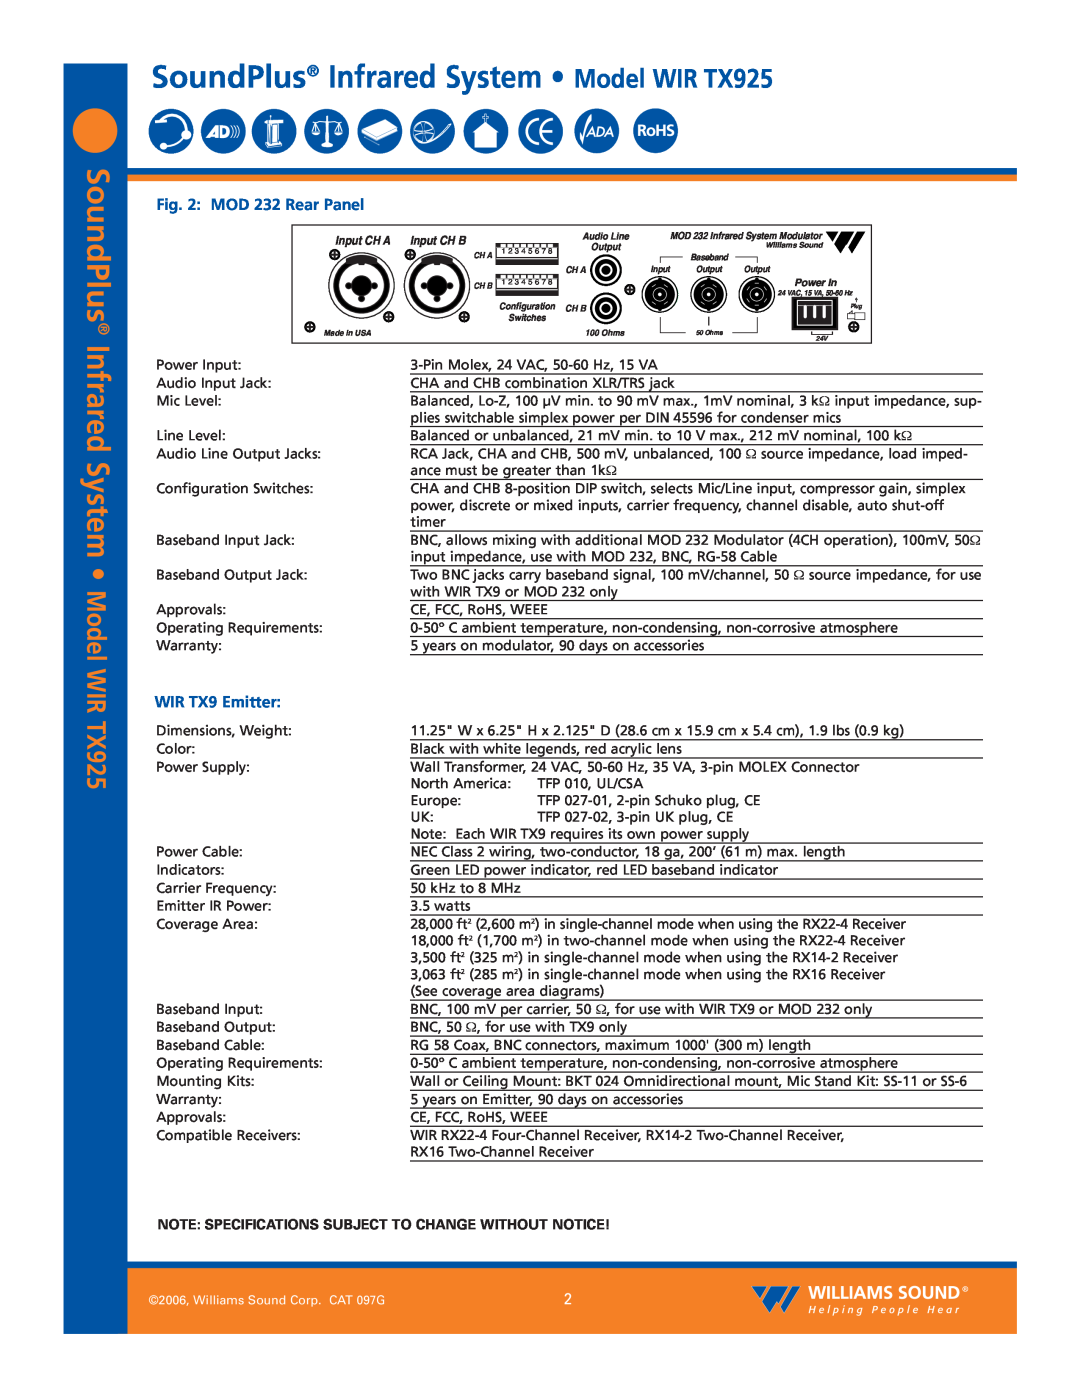 Williams Sound specifications SoundPlus Infrared System Model WIR TX925, MOD 232 Rear Panel, WIR TX9 Emitter 